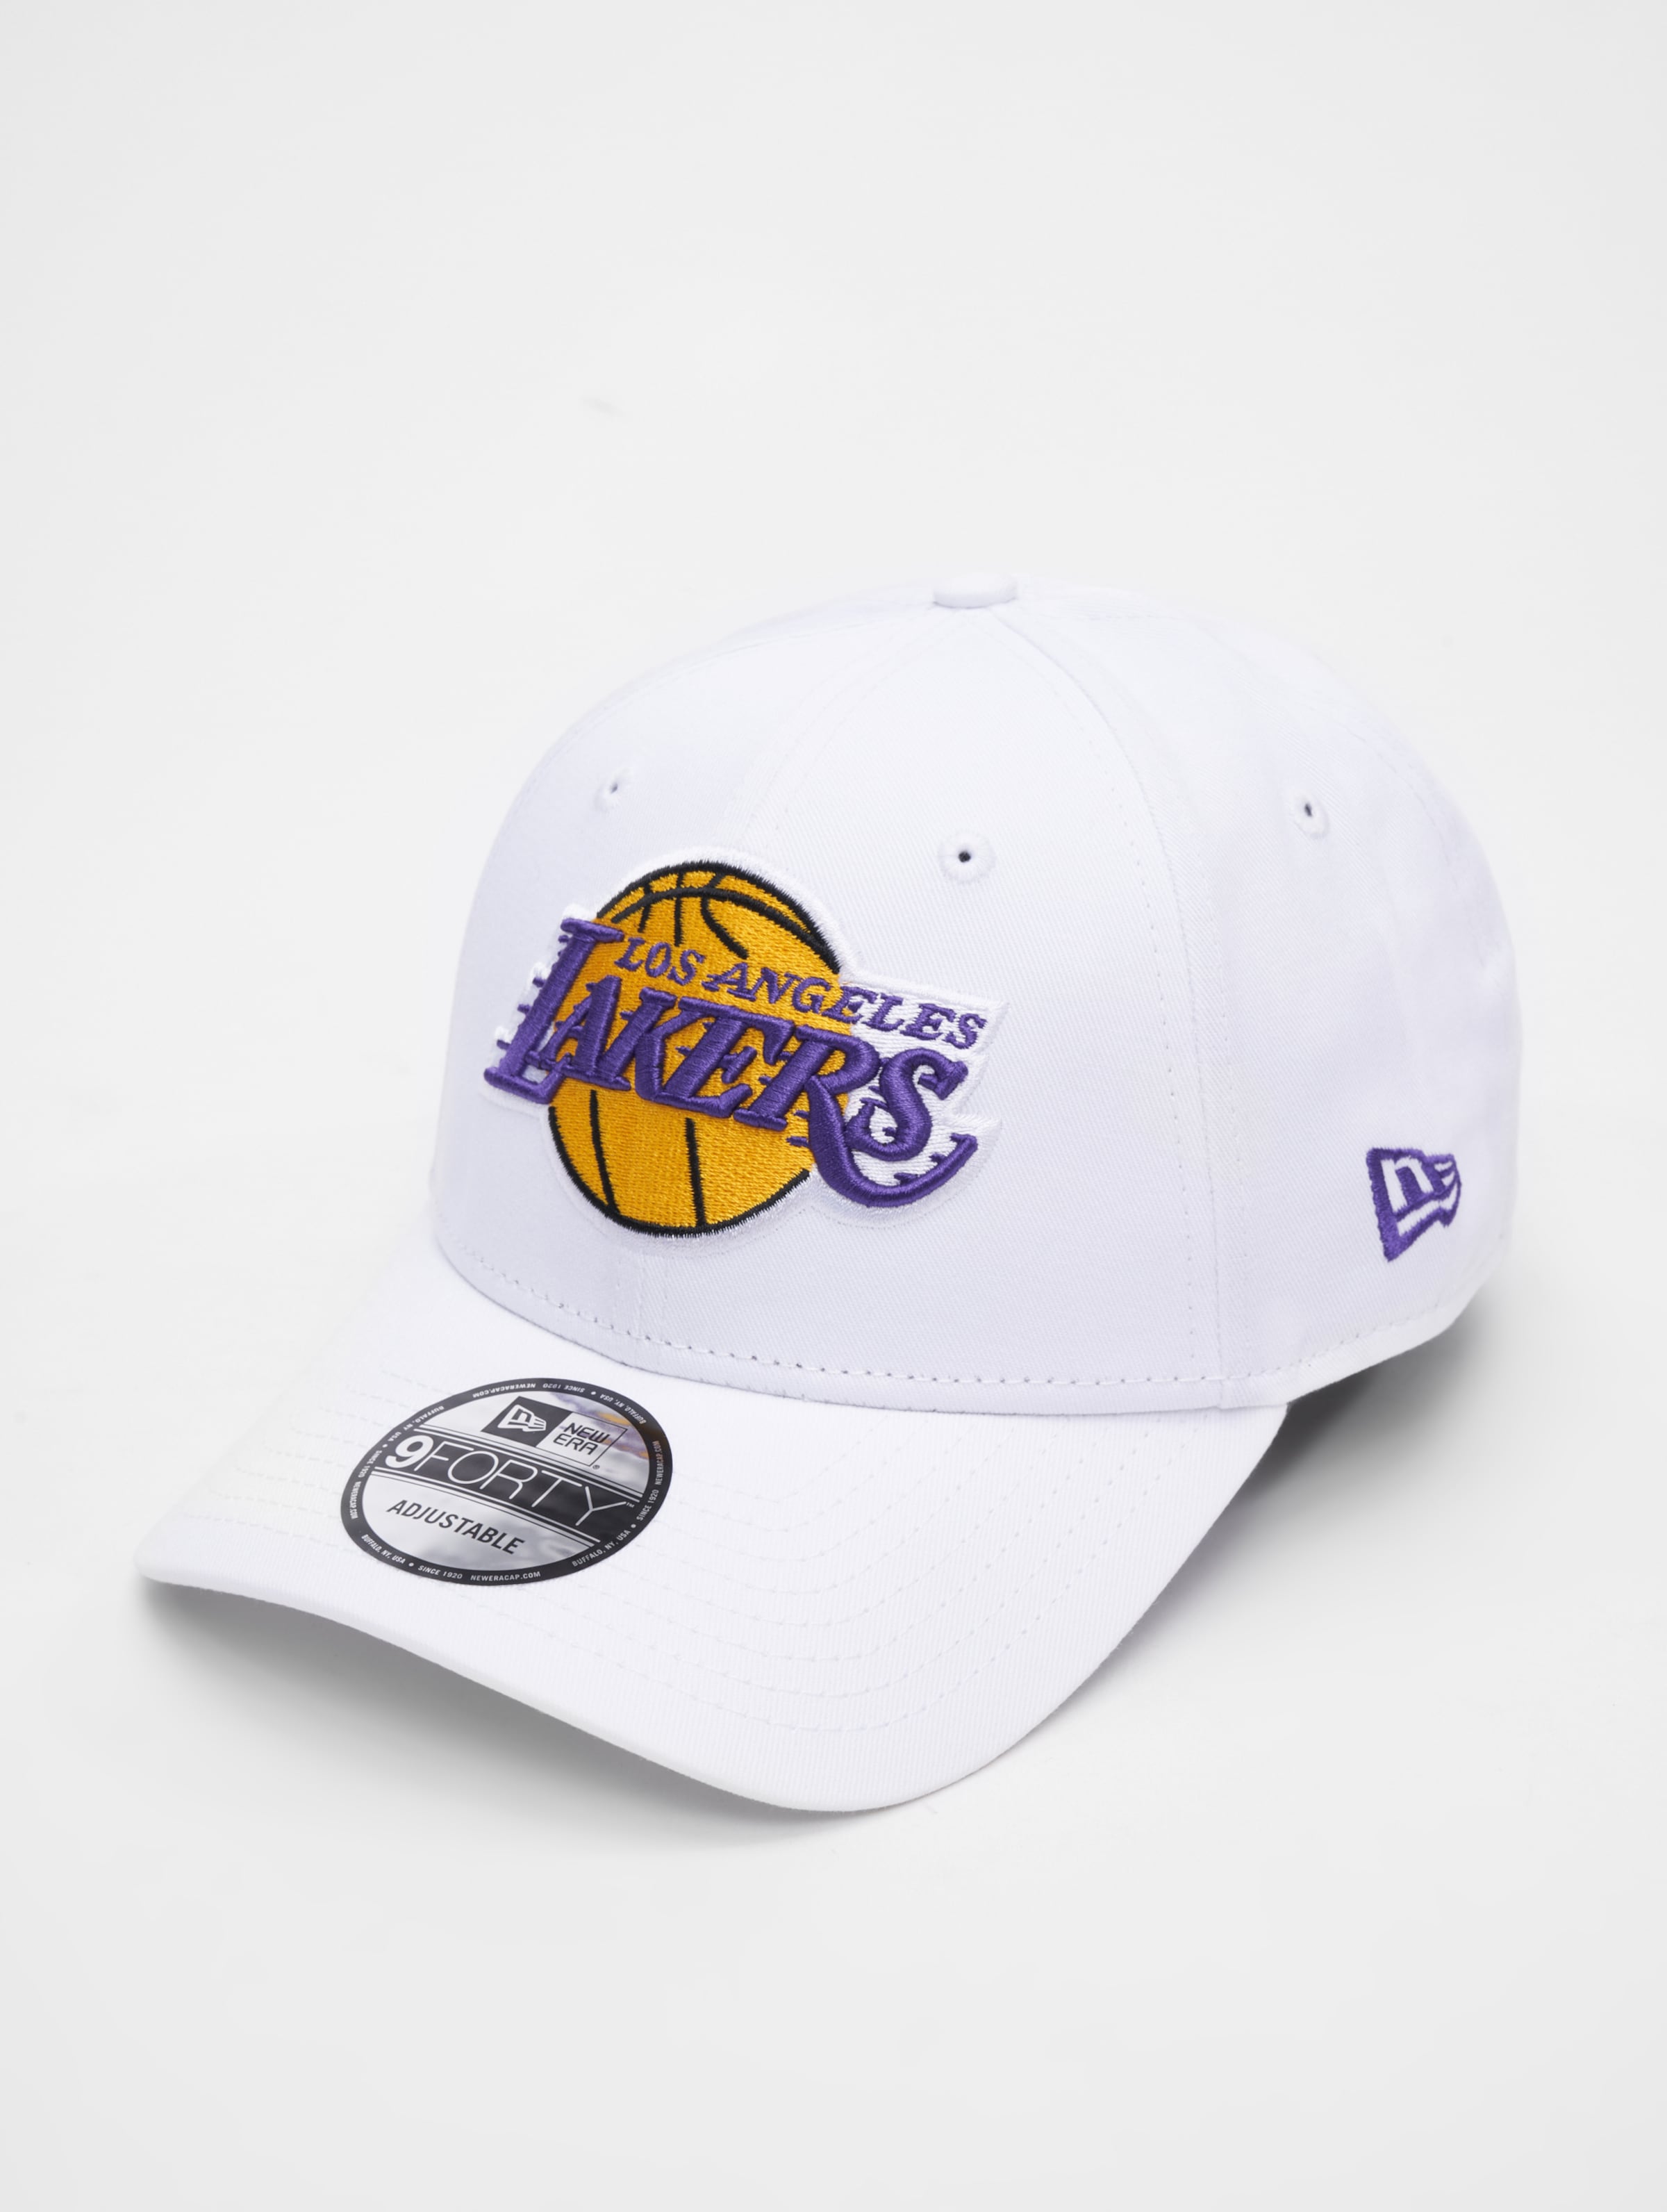 New Era LA Lakers NBA White 9FORTY Adjustable Cap